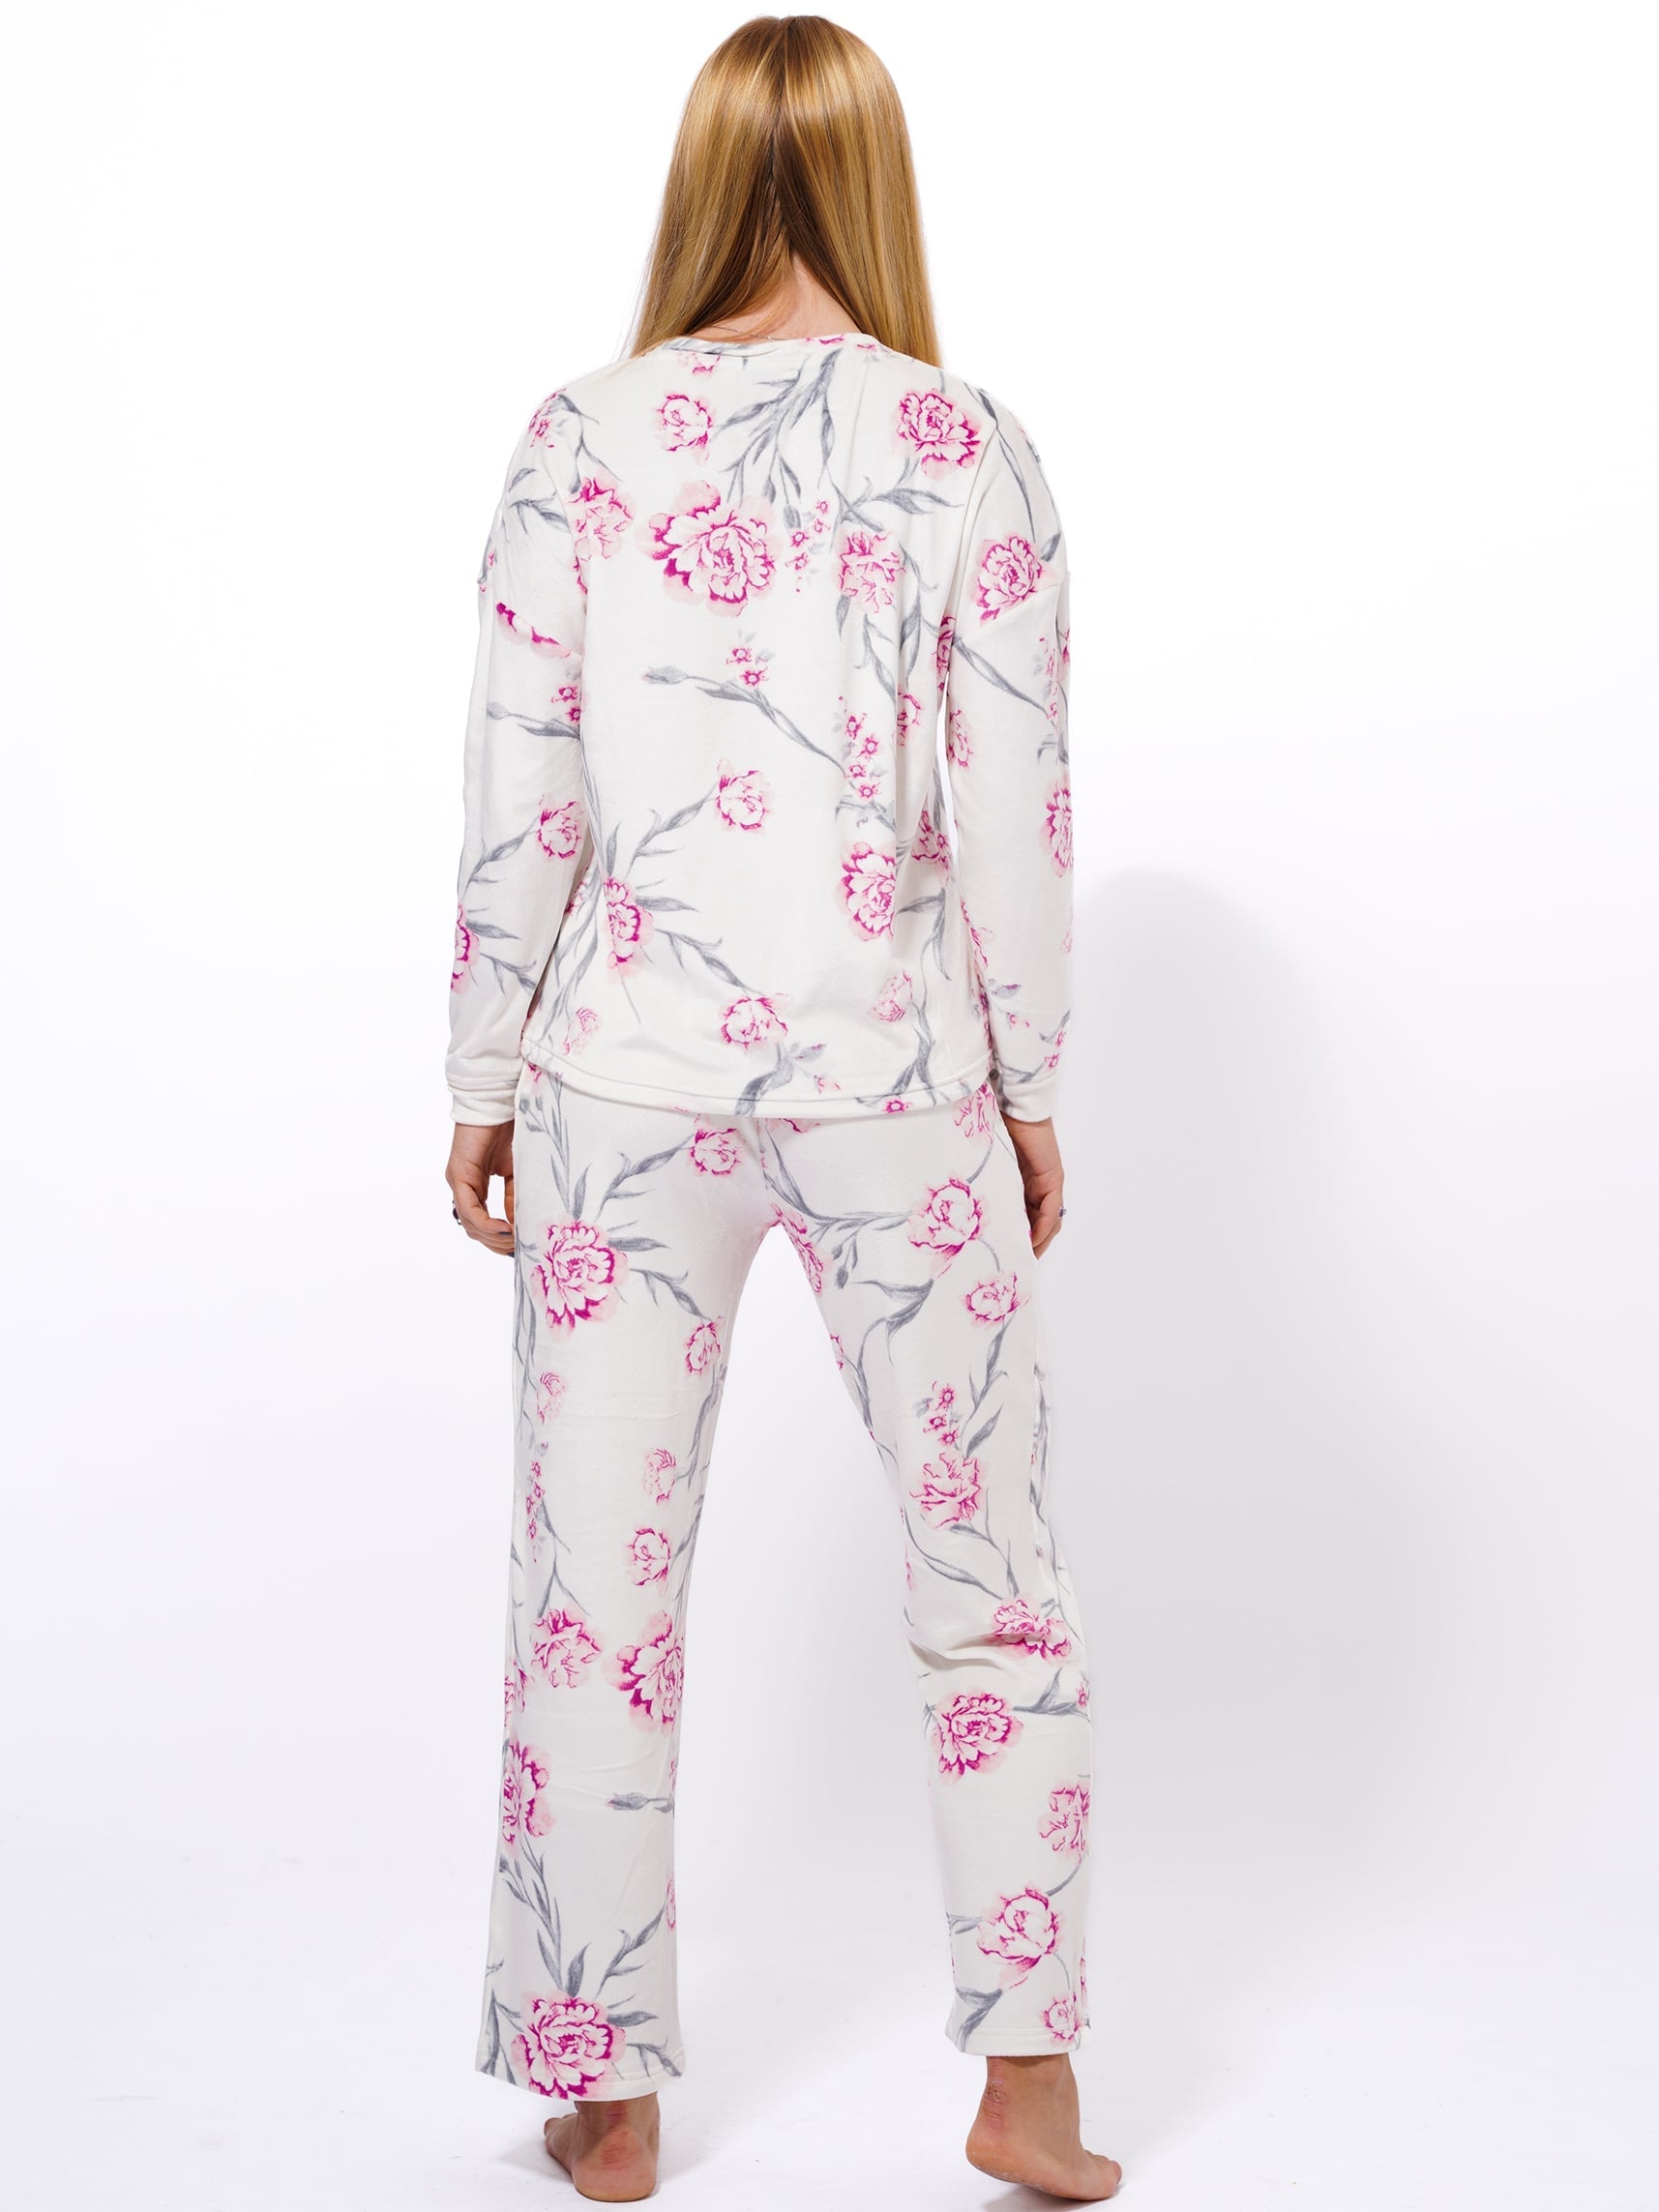 Floral Print Pajamas - Women's Sleepwear Set | CozyPJs - inteblu